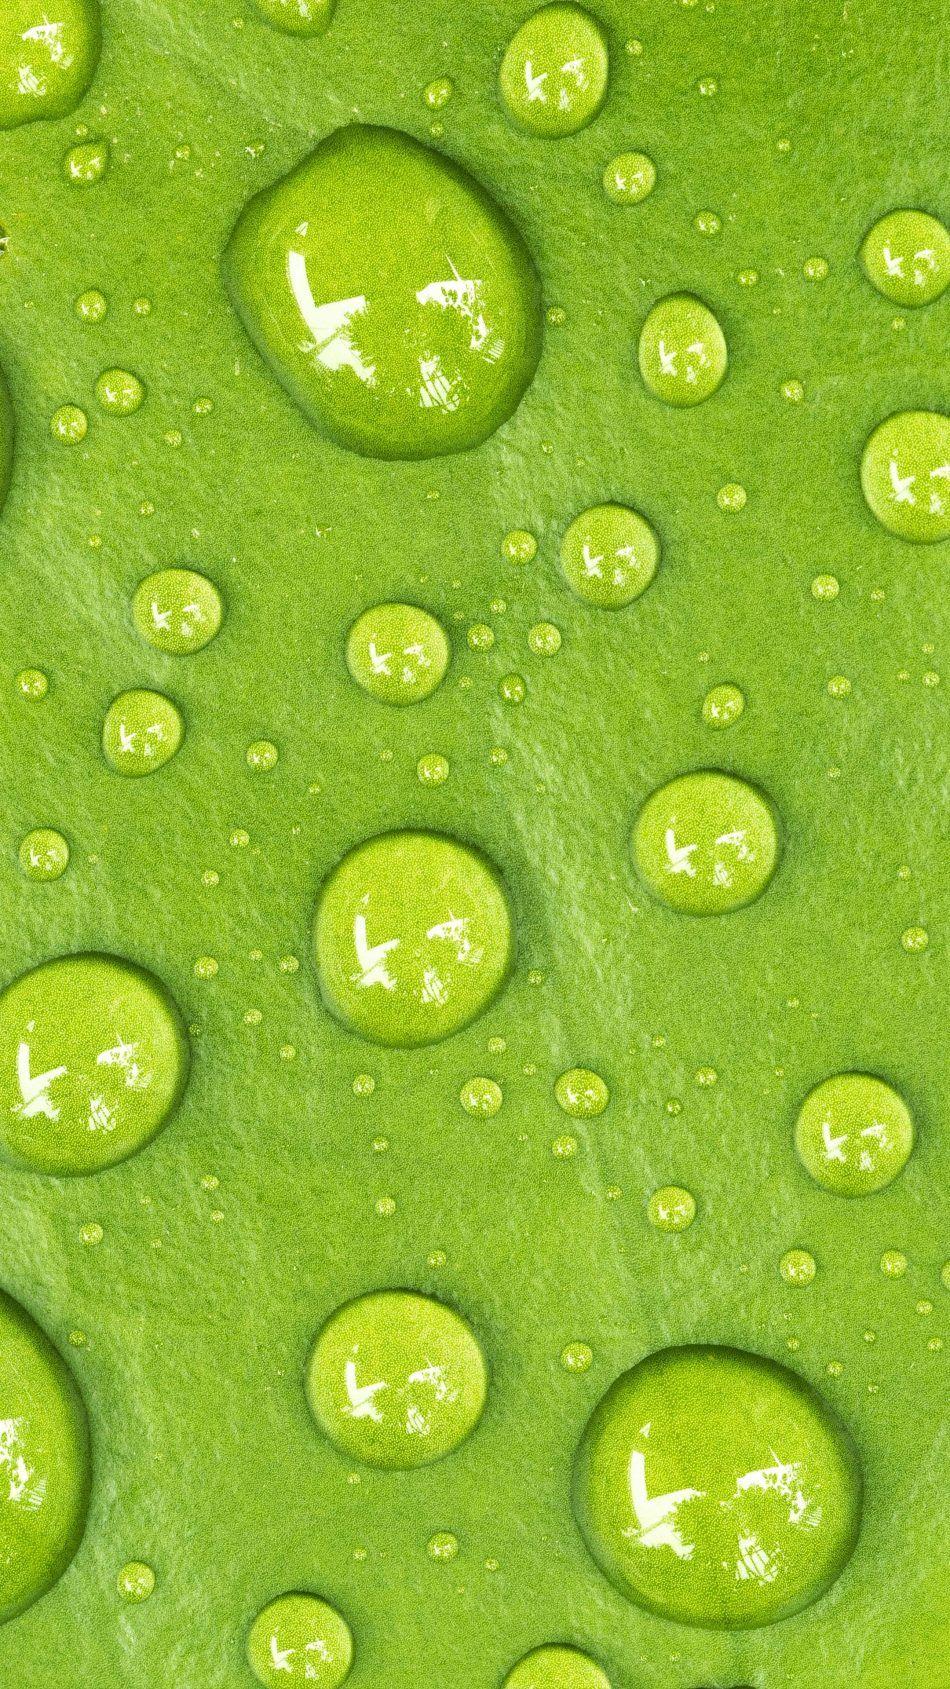 Water Drop Green Macro 4K Ultra HD Mobile Wallpaper. Green leaf wallpaper, Wallpaper, Leaf wallpaper